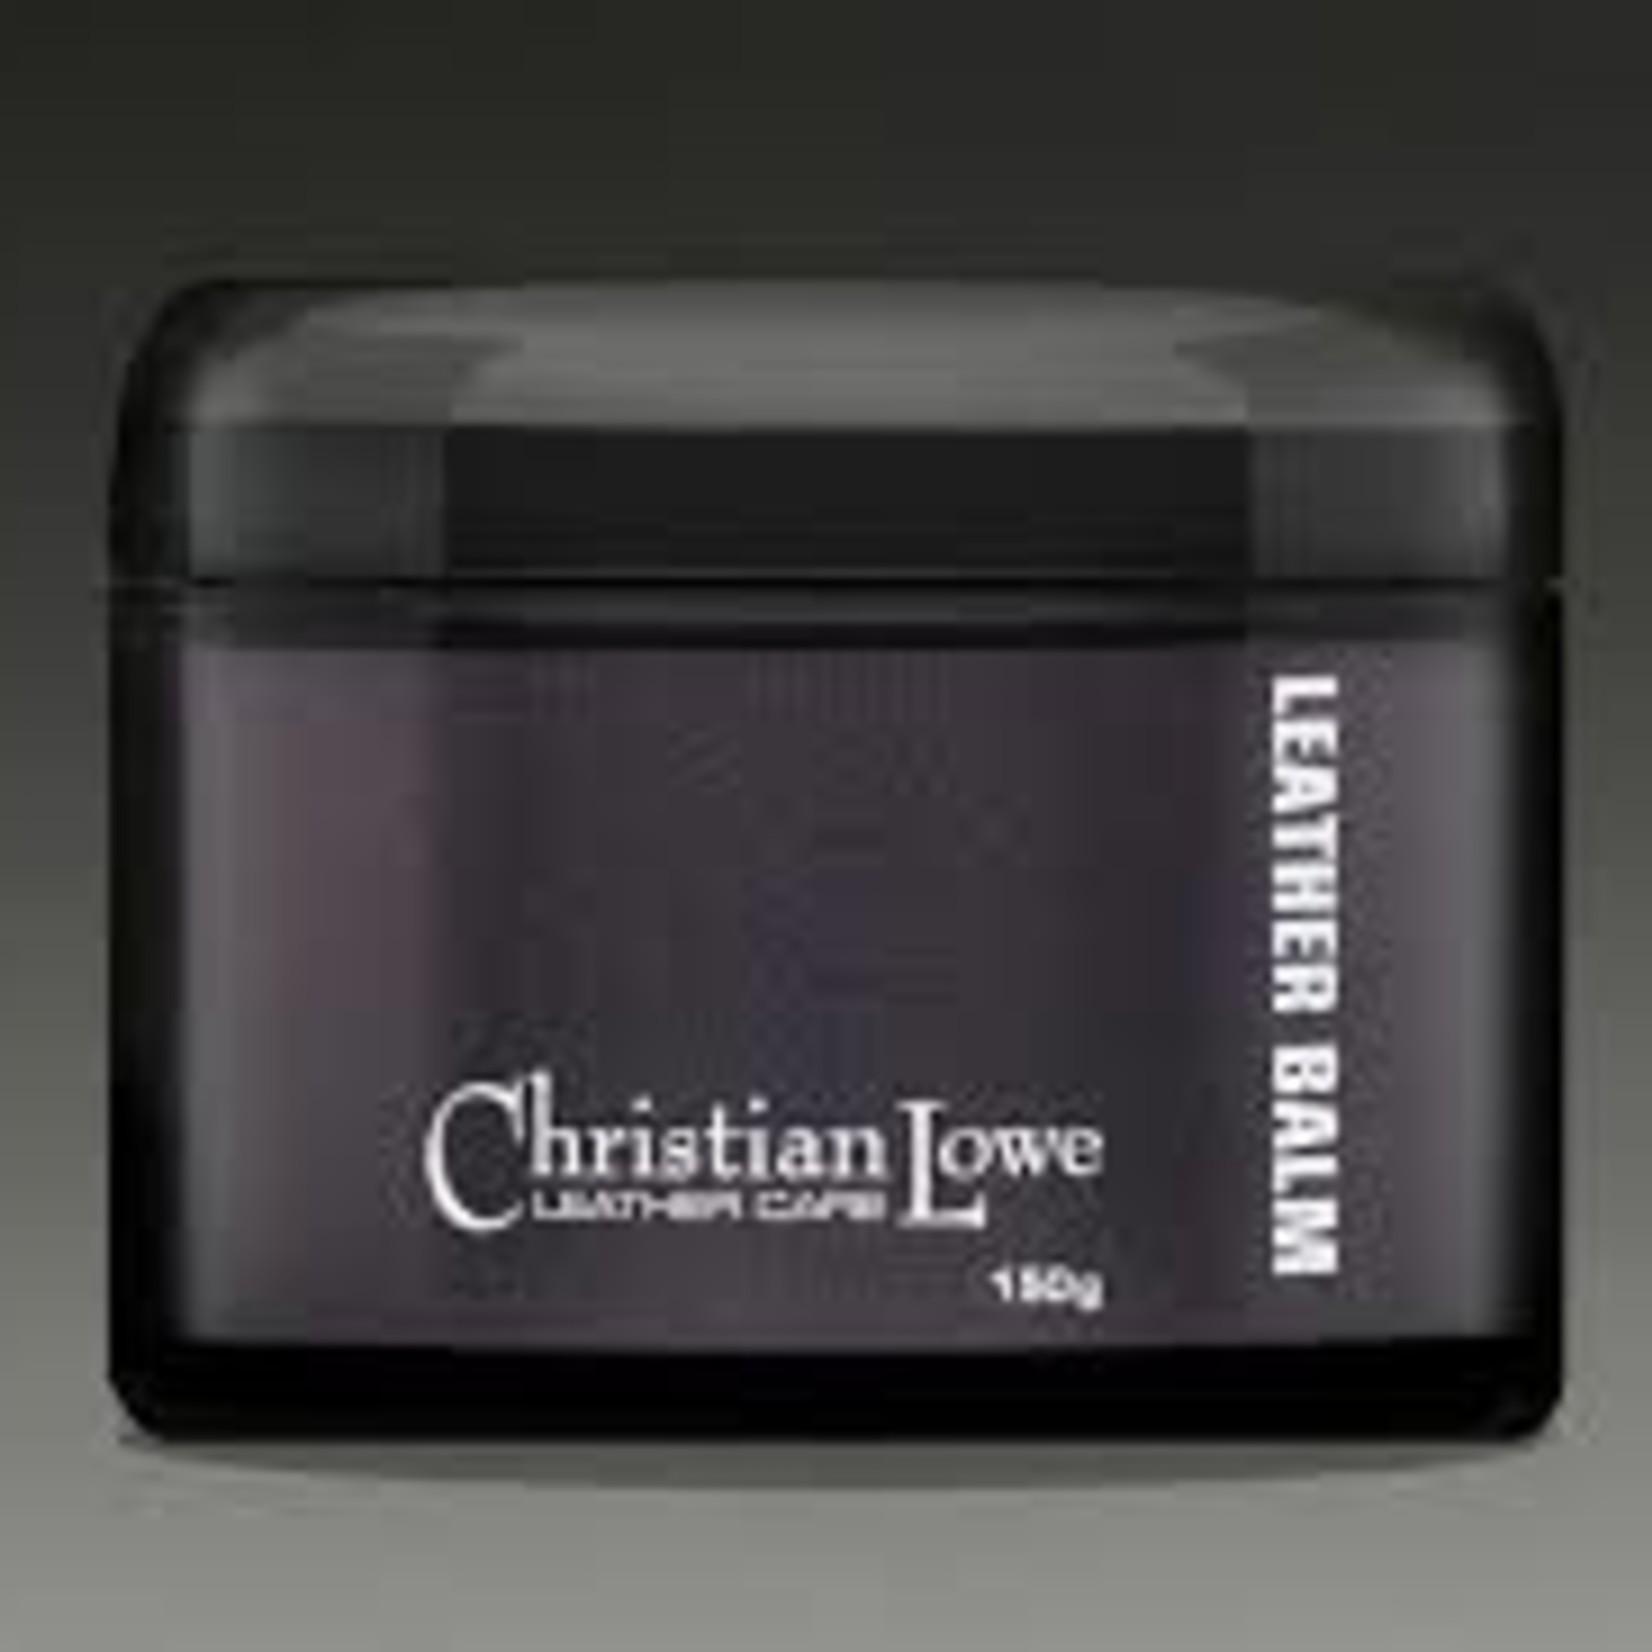 Christian Lowe Christian Lowe Leather Balm